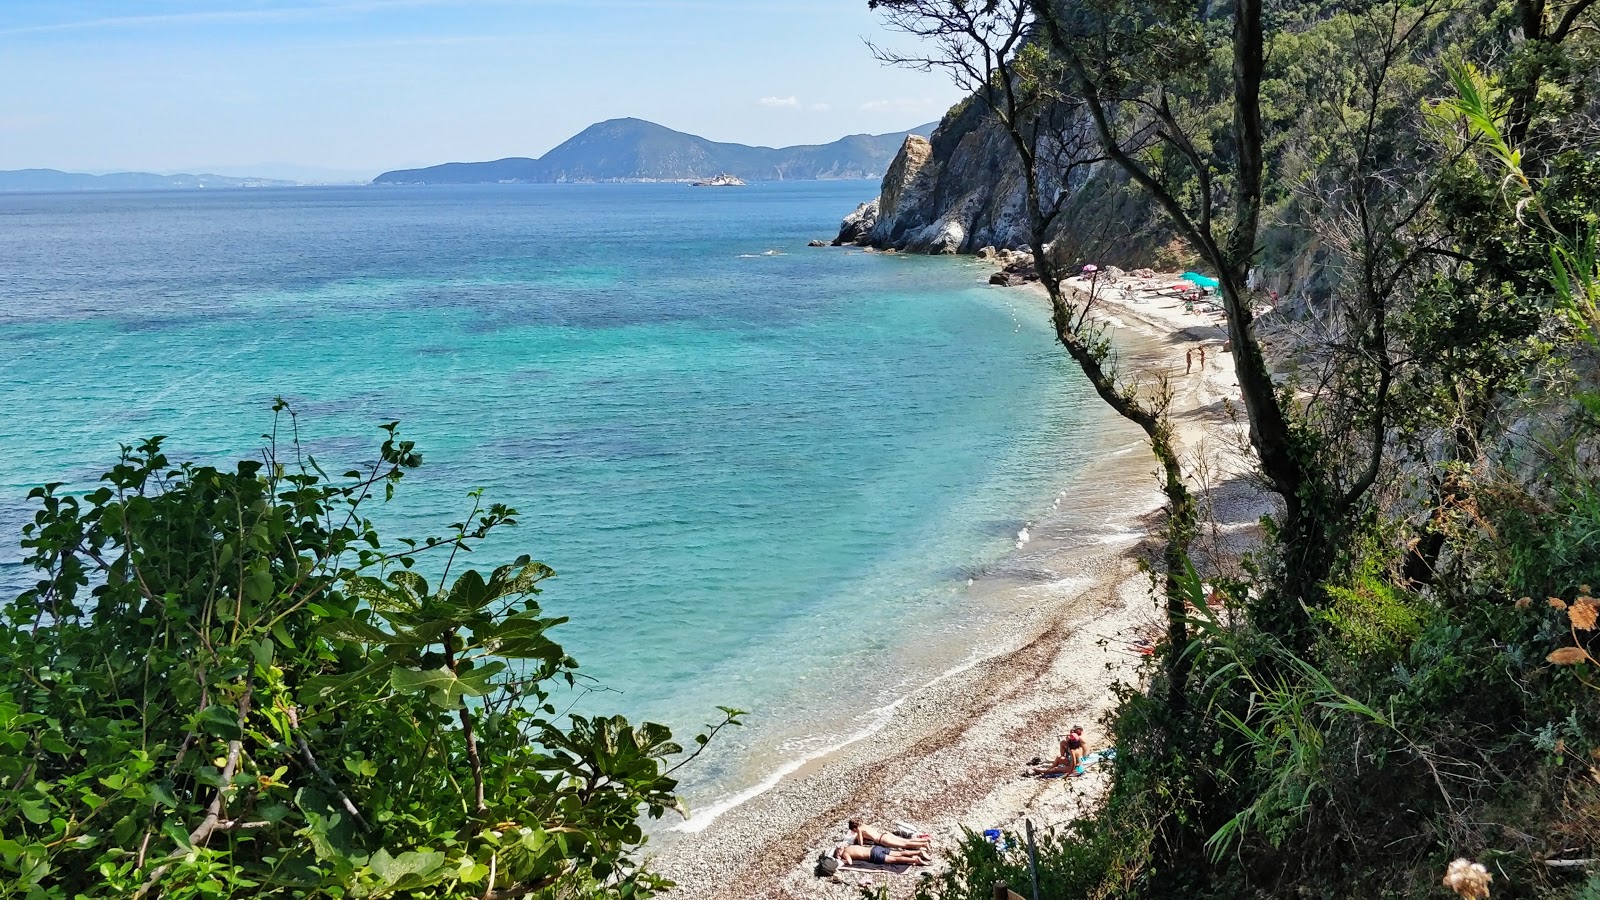 Fotografie cu Spiaggia di Seccione cu nivelul de curățenie înalt